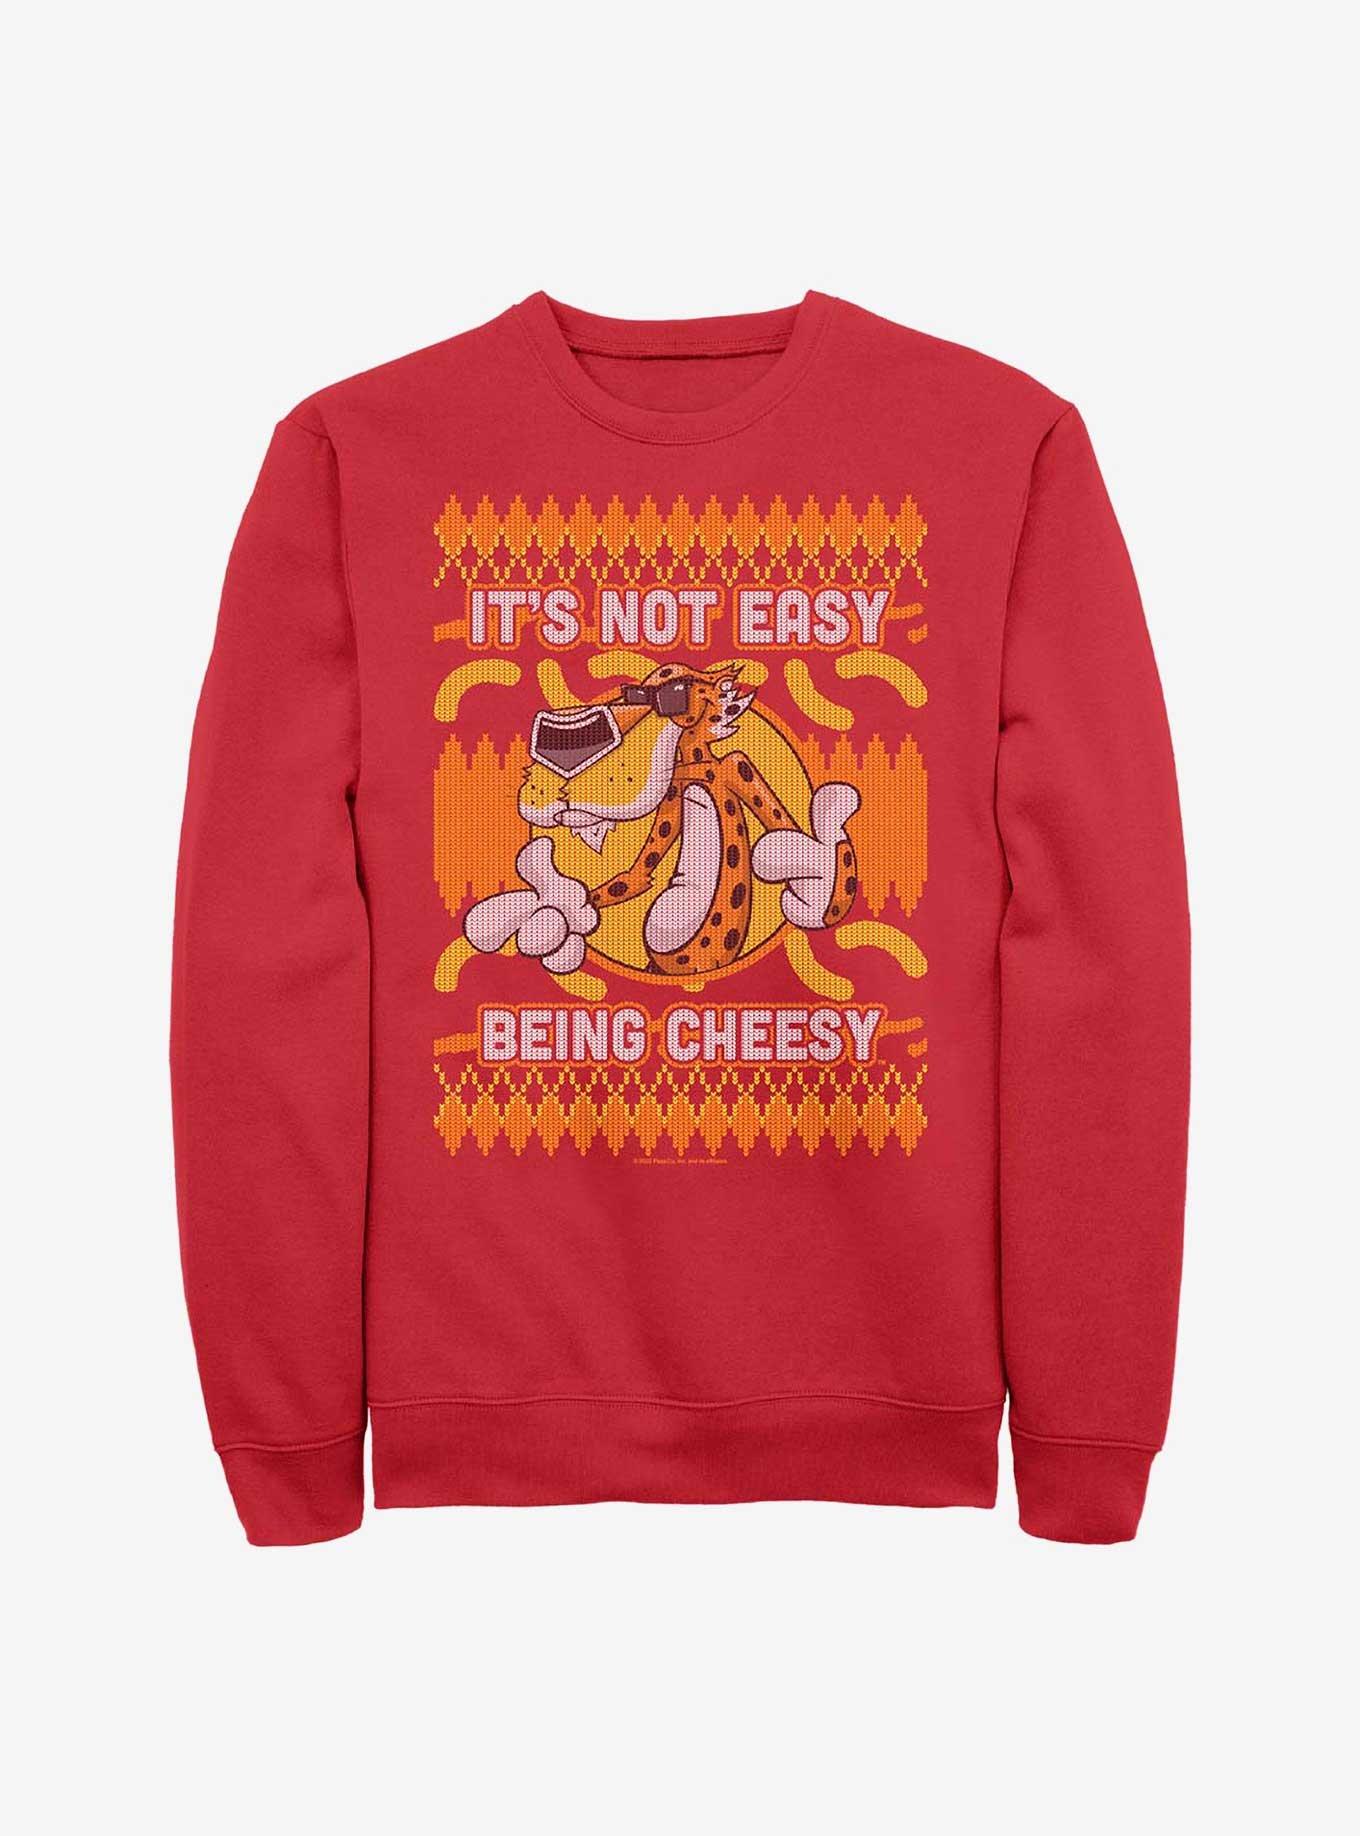 Cheetos Chester Cheetah Ugly Christmas Sweater Pattern Sweatshirt